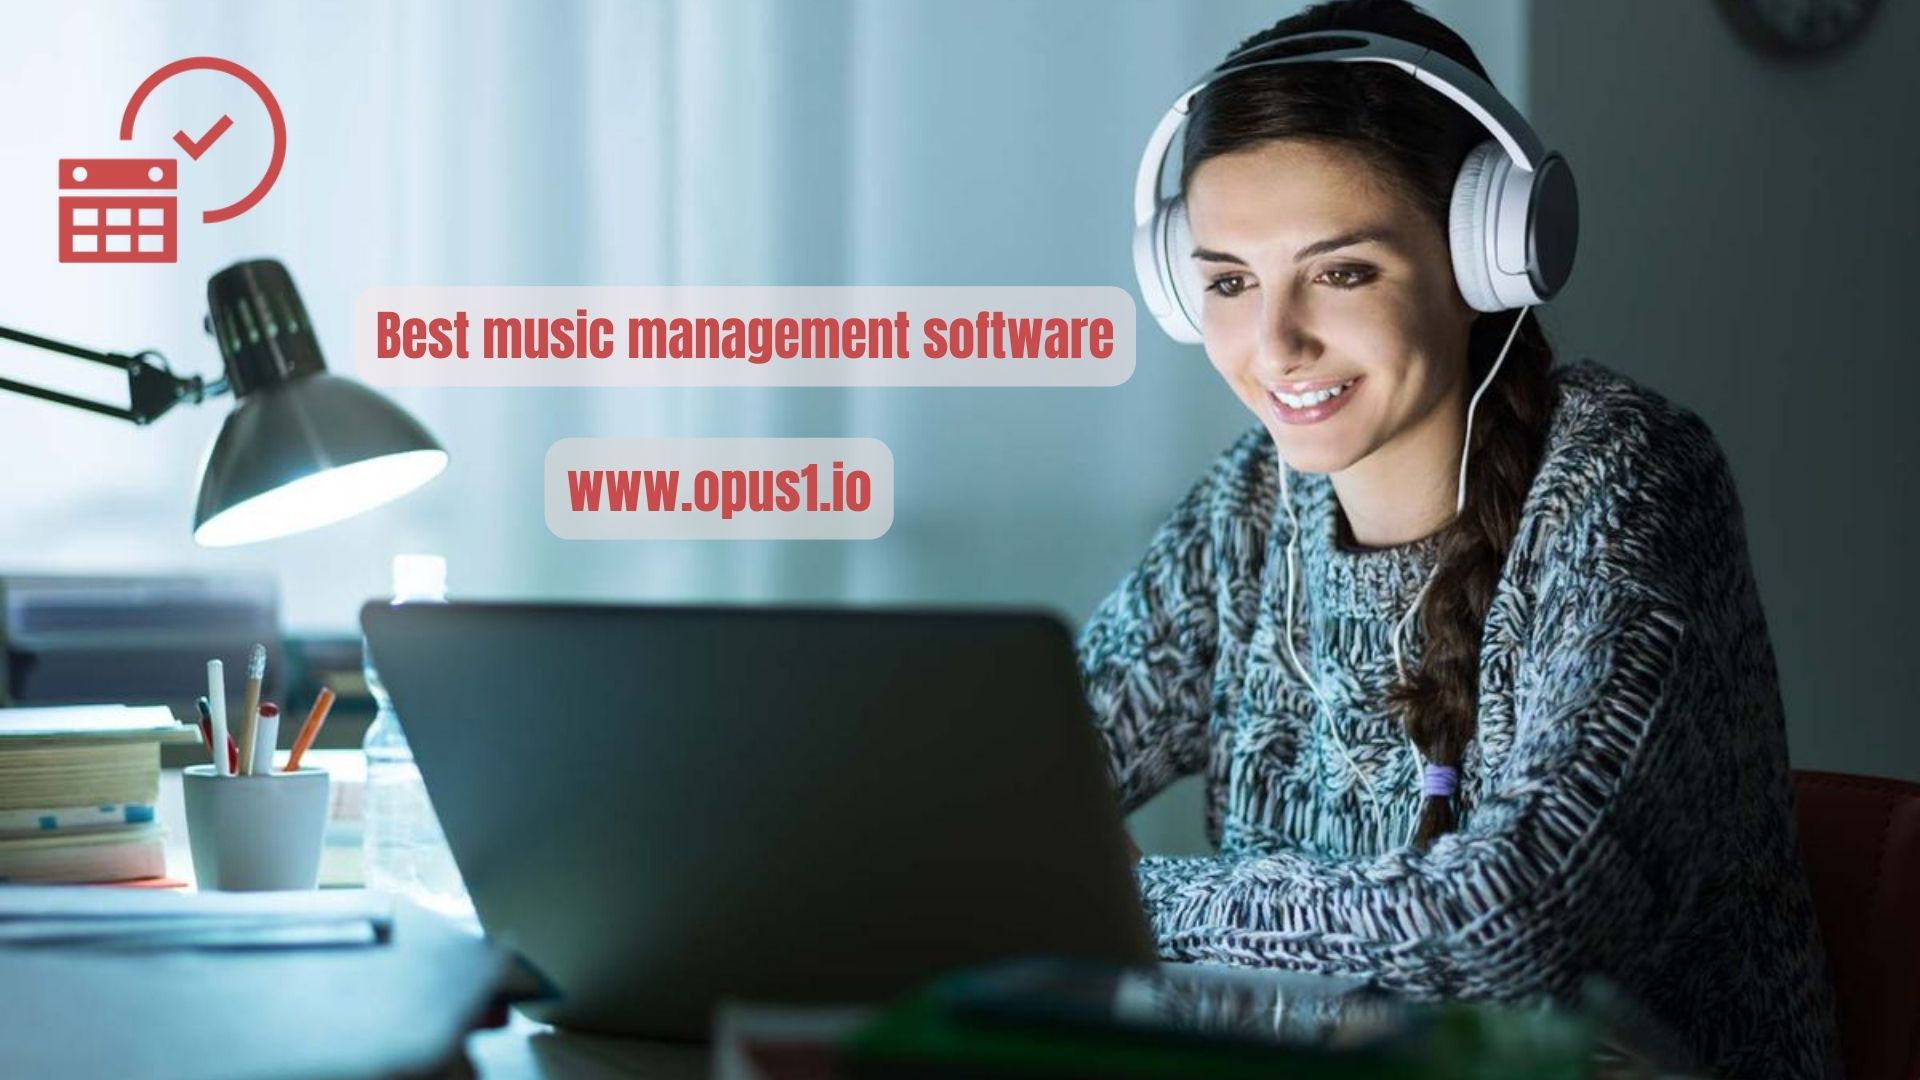  Opus1: best music school management software